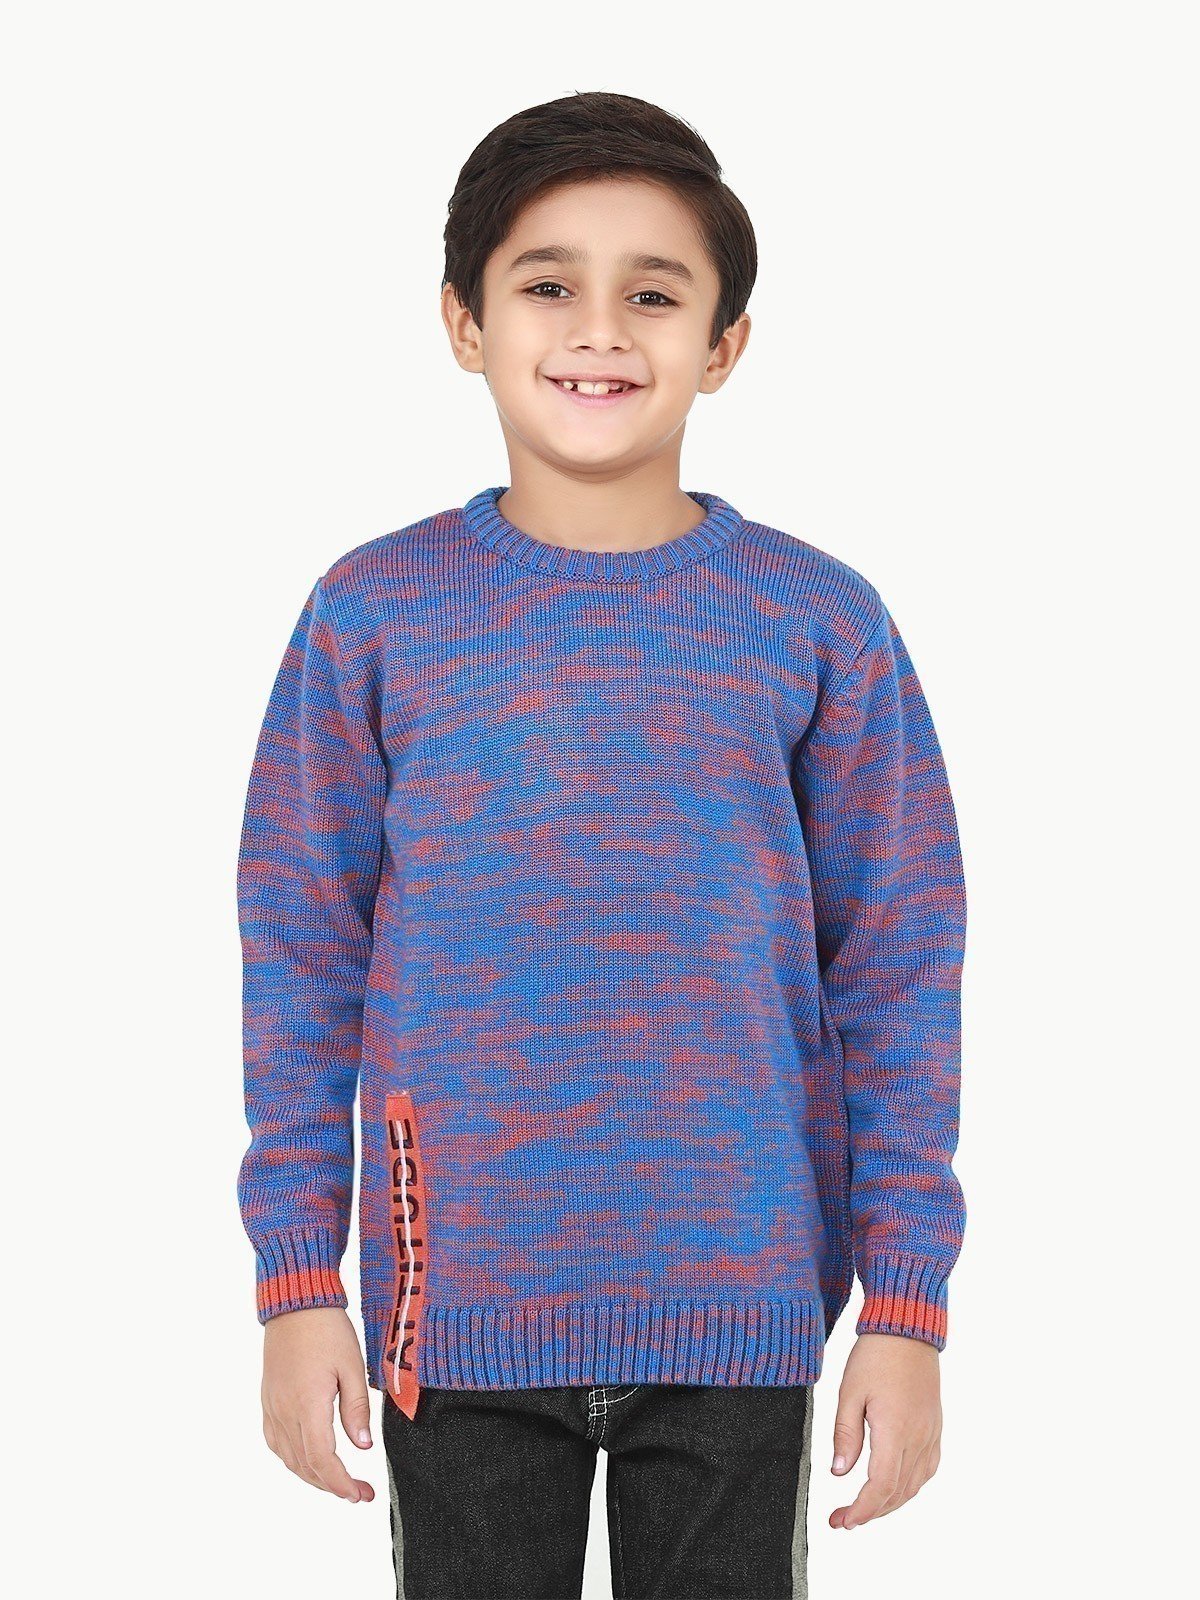 Boy's Blue & Orange Sweater - EBTSWT22-003